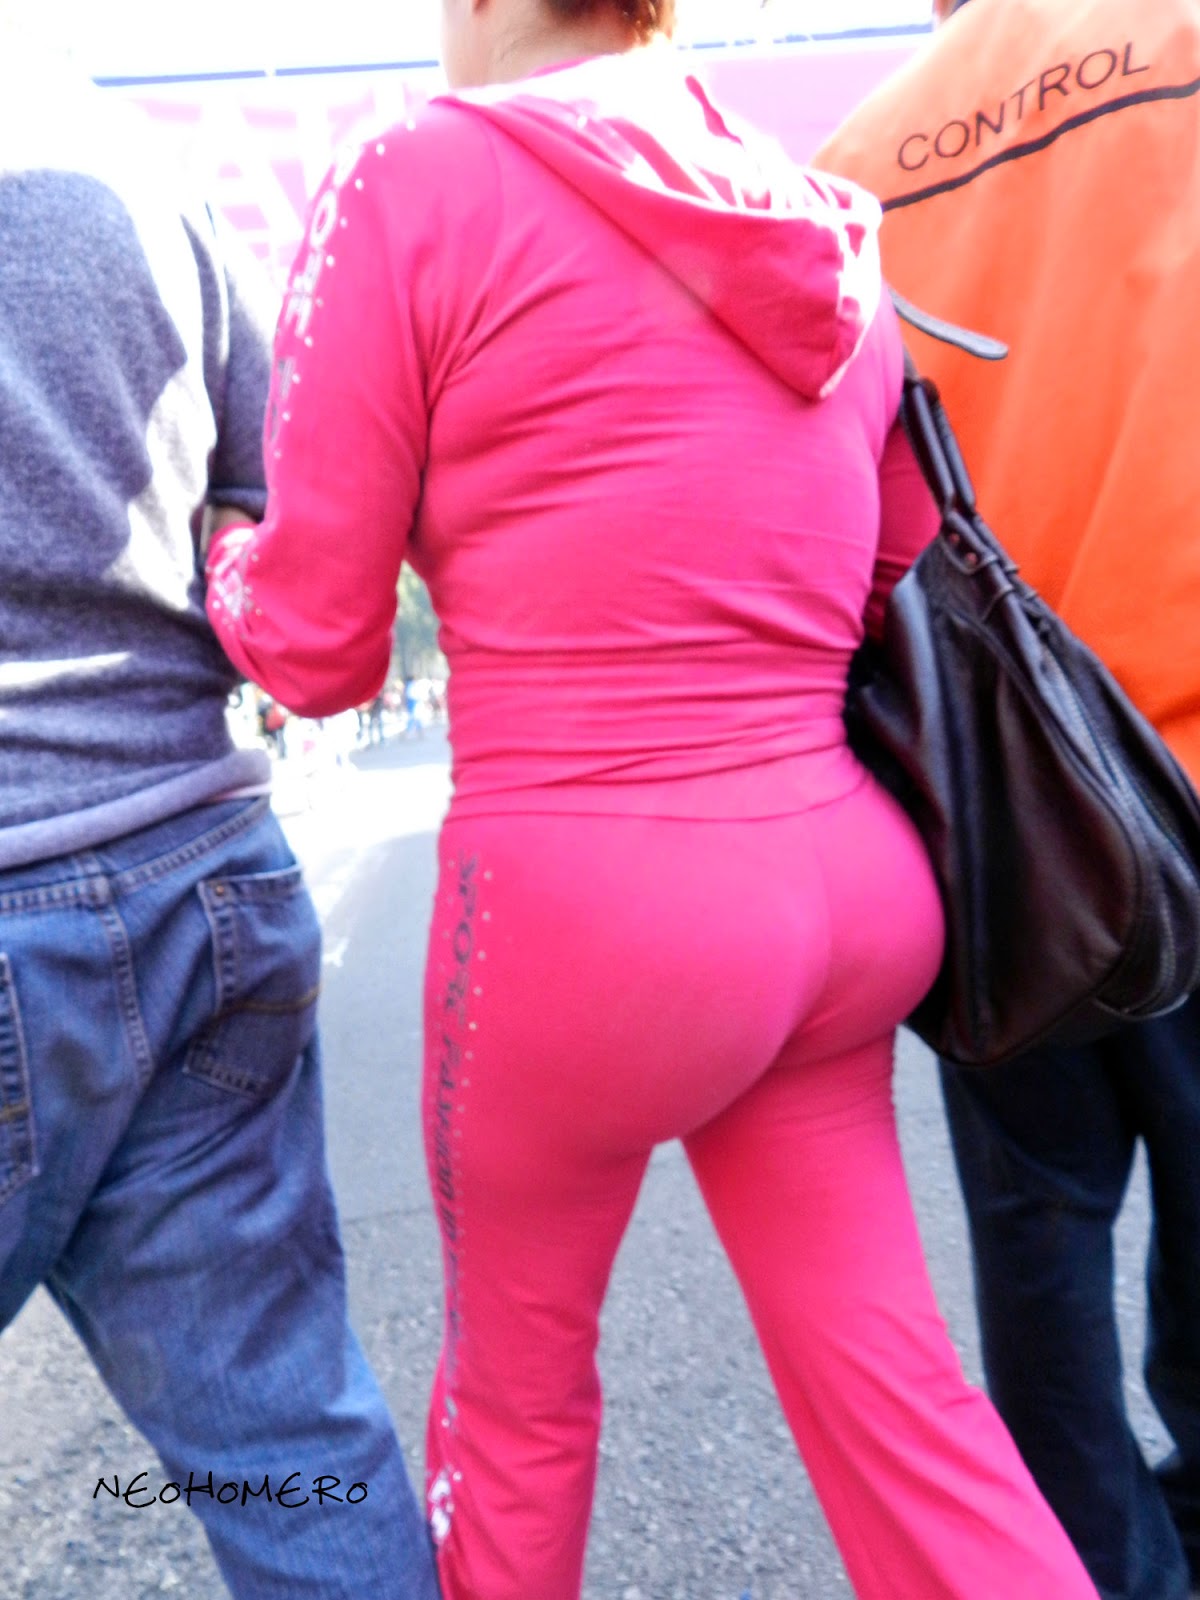 Fat girl in tight pants